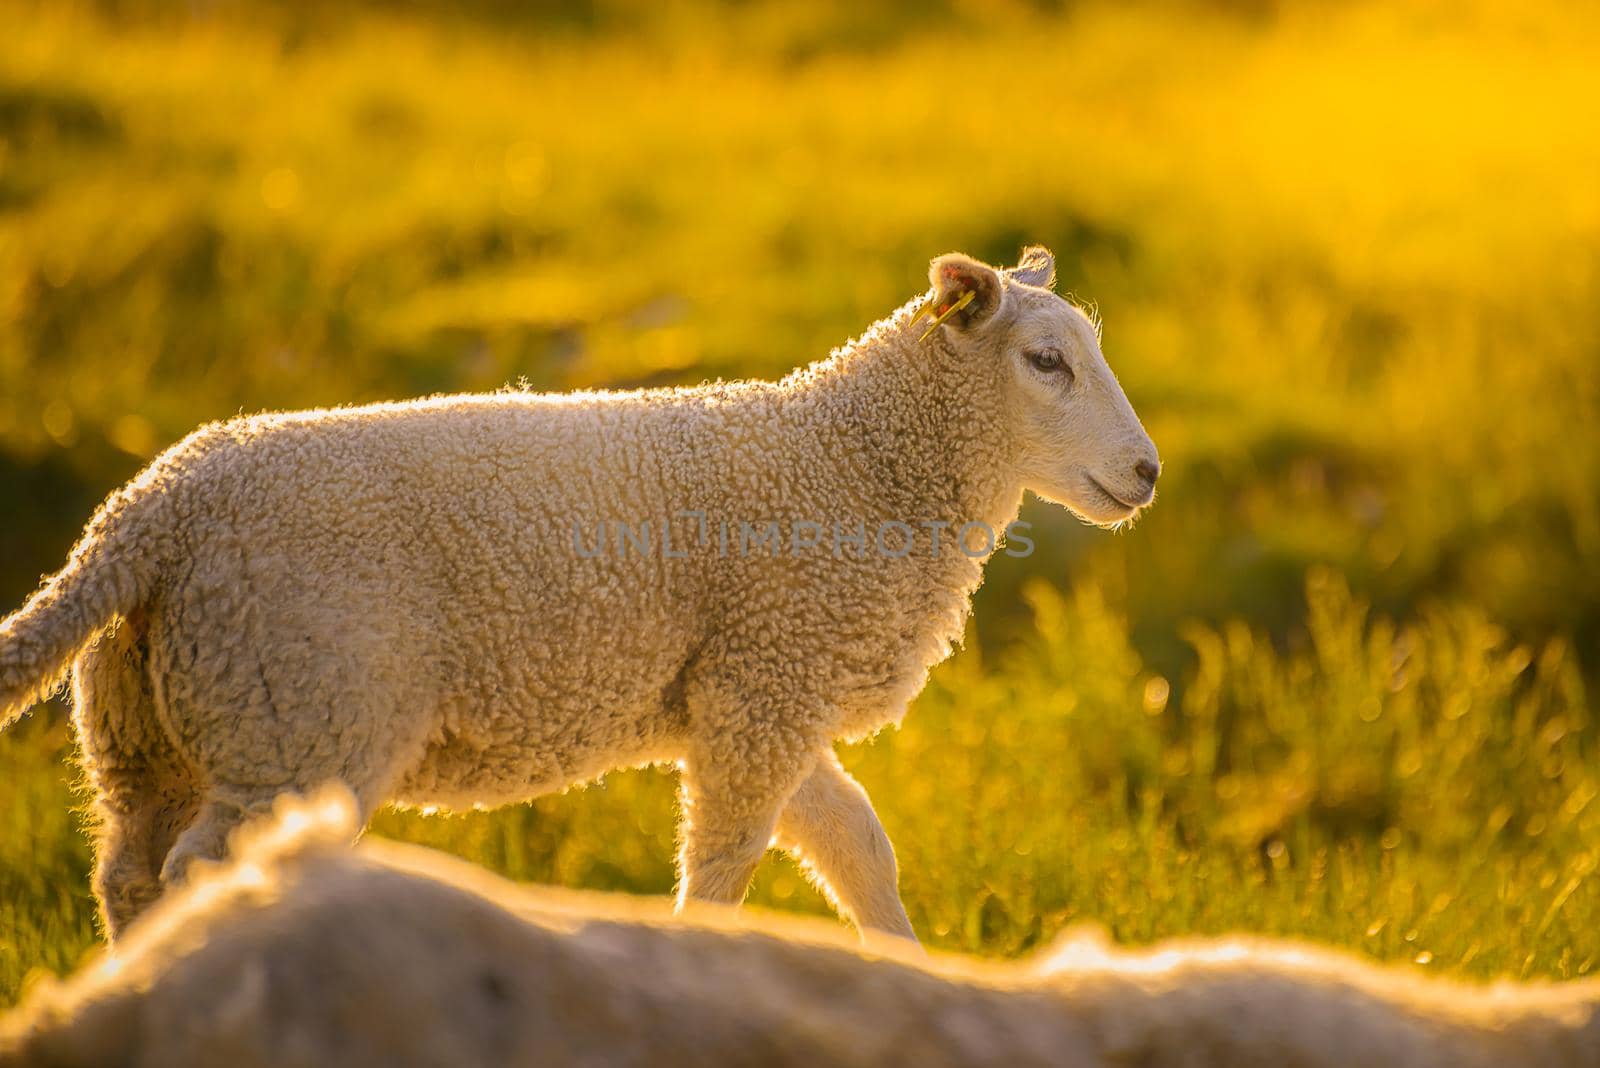 Sheep in Norway walking freely